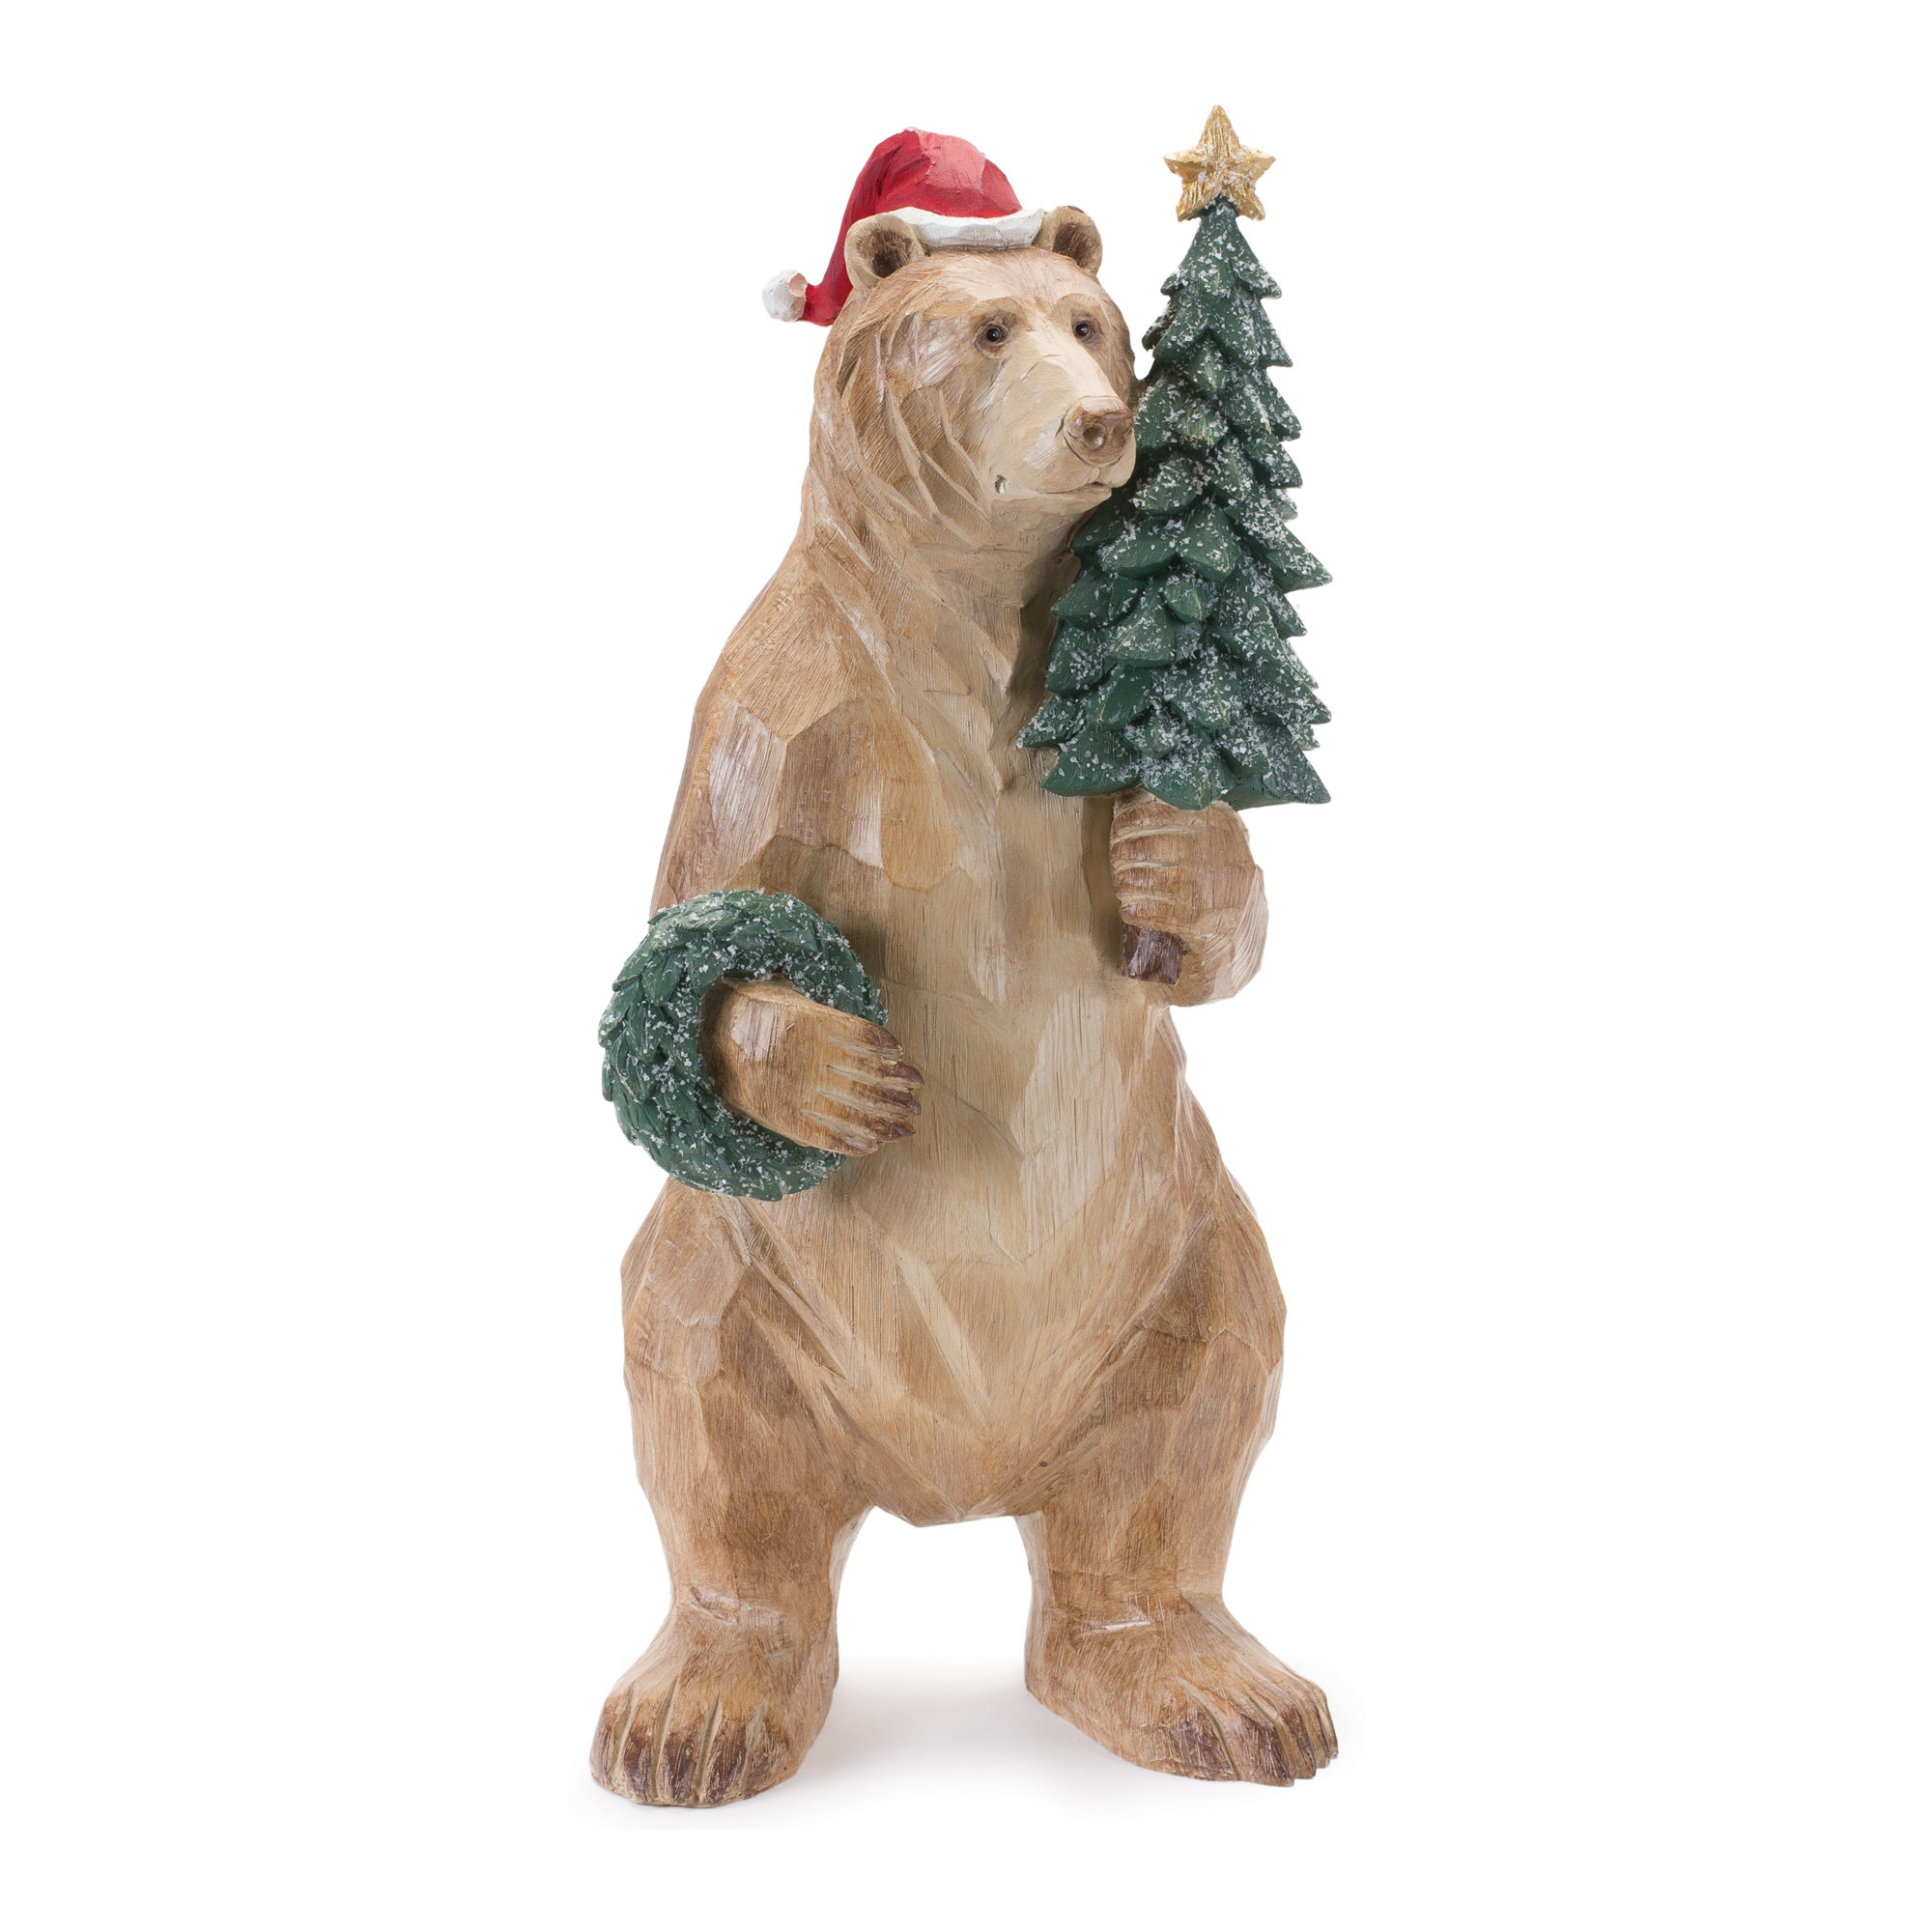 First Time As a Mama Christmas Ornament, Mama Bear Ceramic